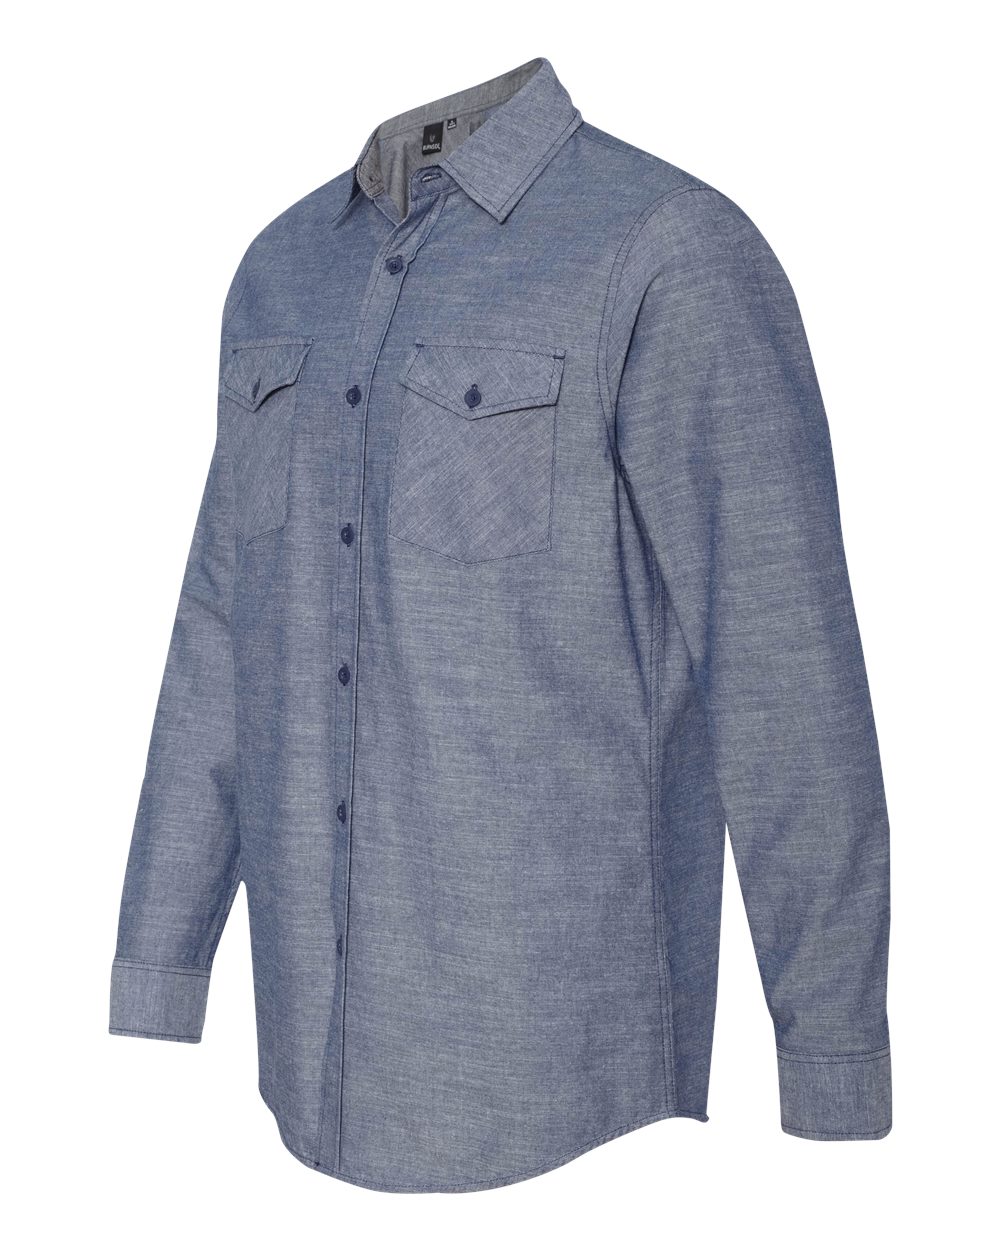 Burnside Chambray Long Sleeve Shirt - image 2 of 5